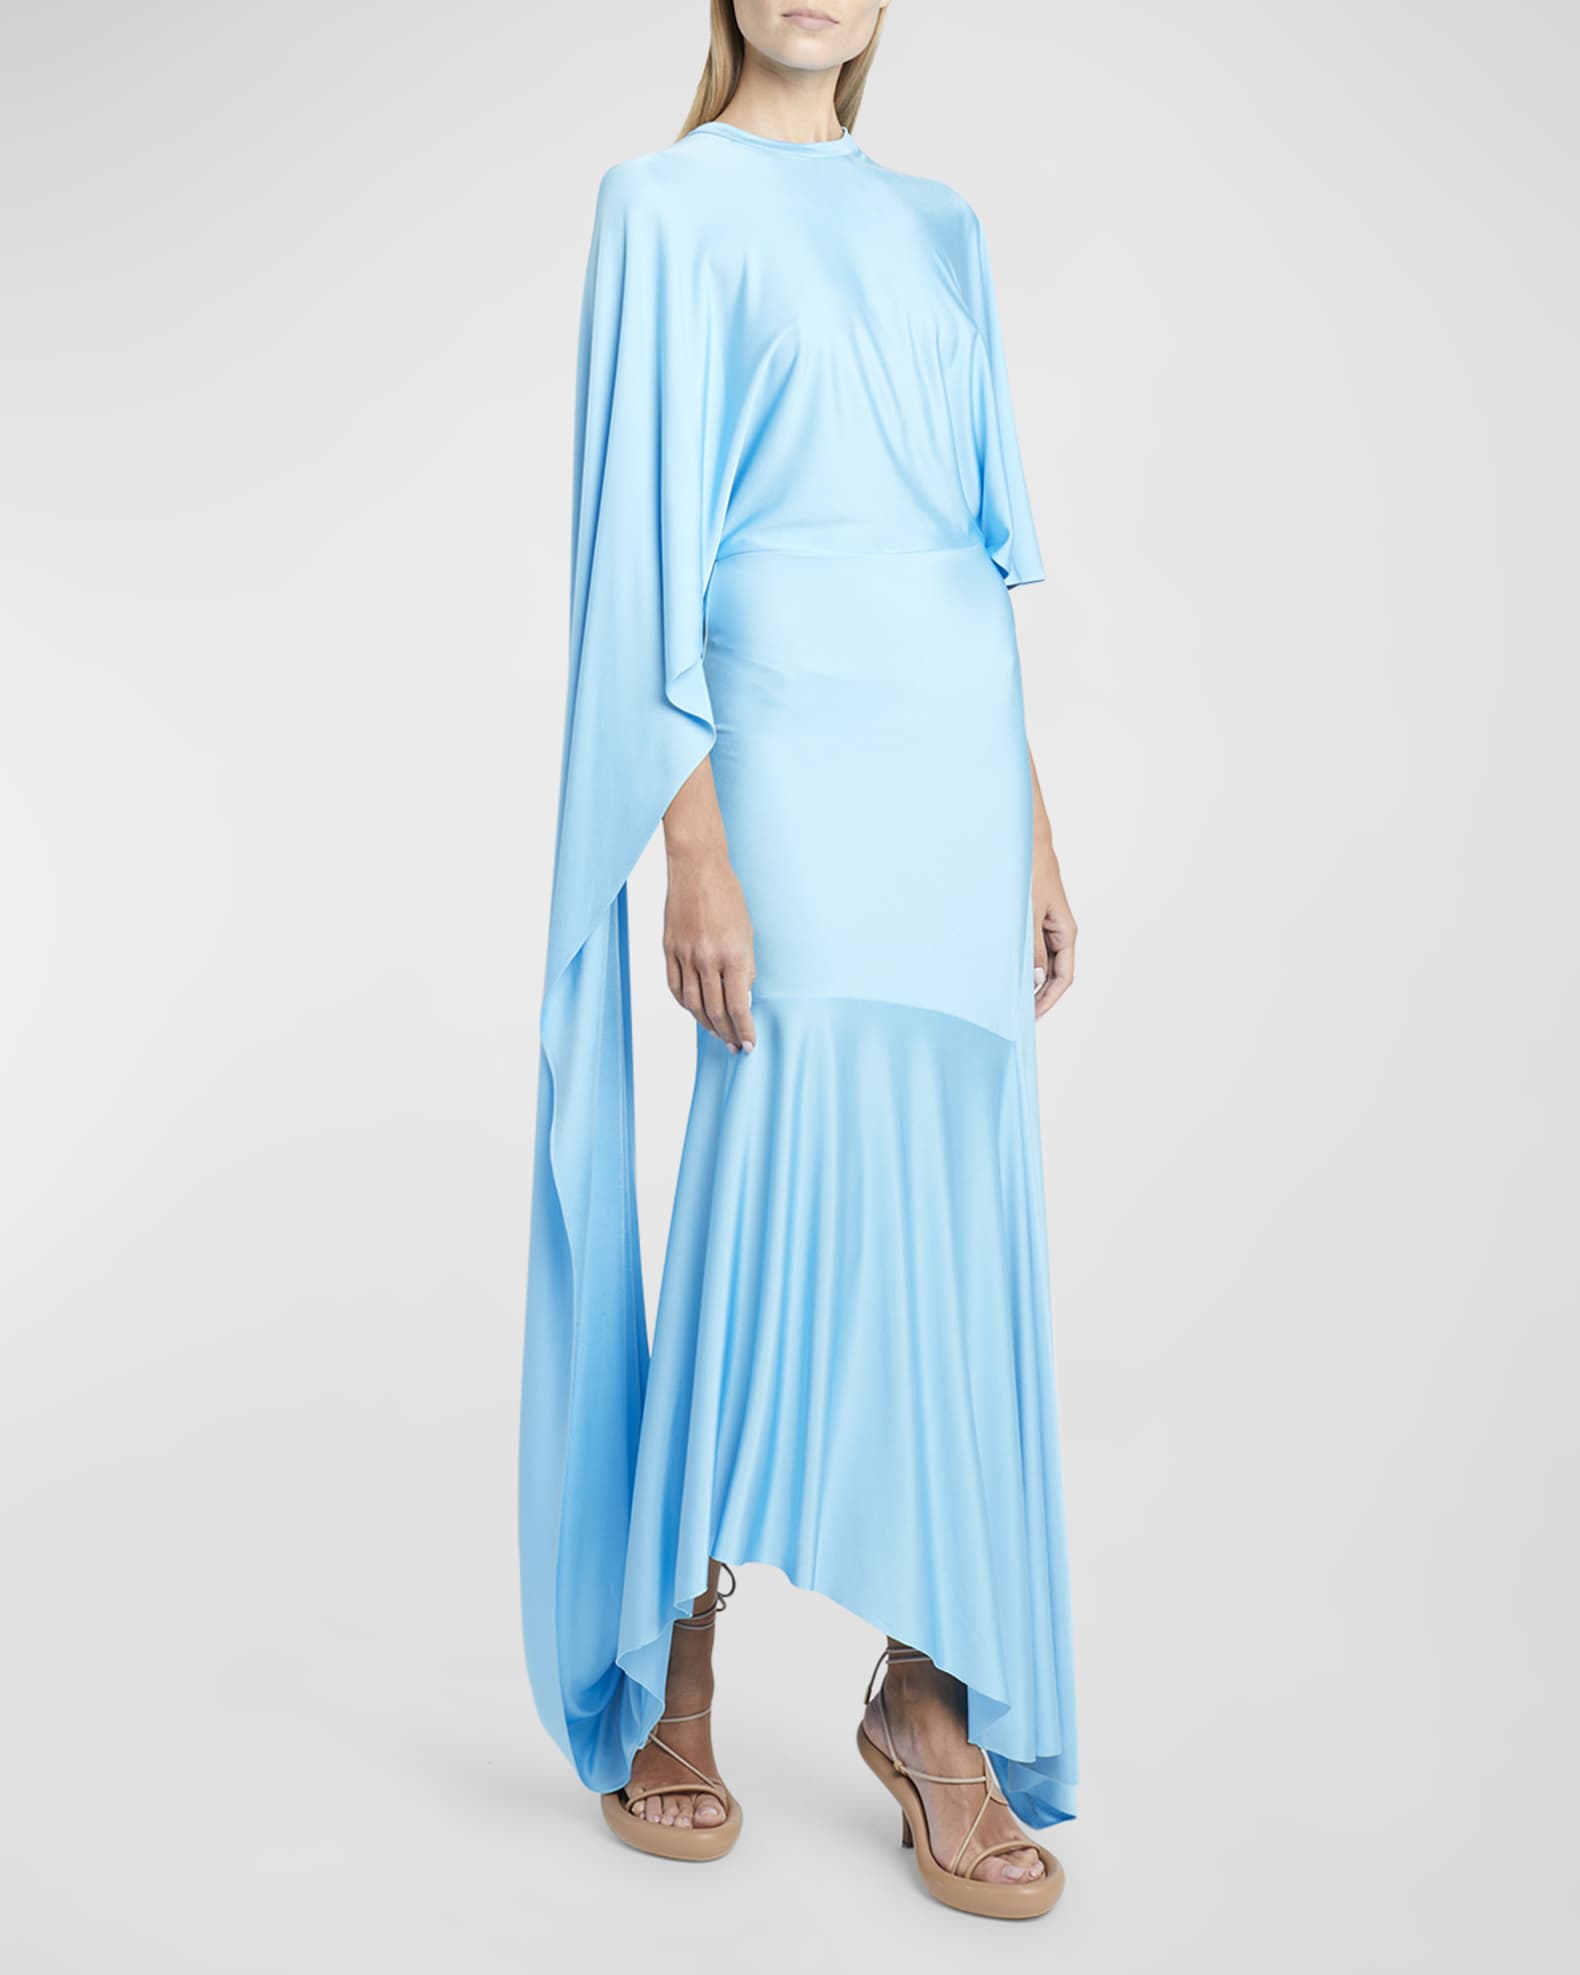 Stella McCartney Draped Asymmetric Gown with Back Cutouts | Neiman Marcus